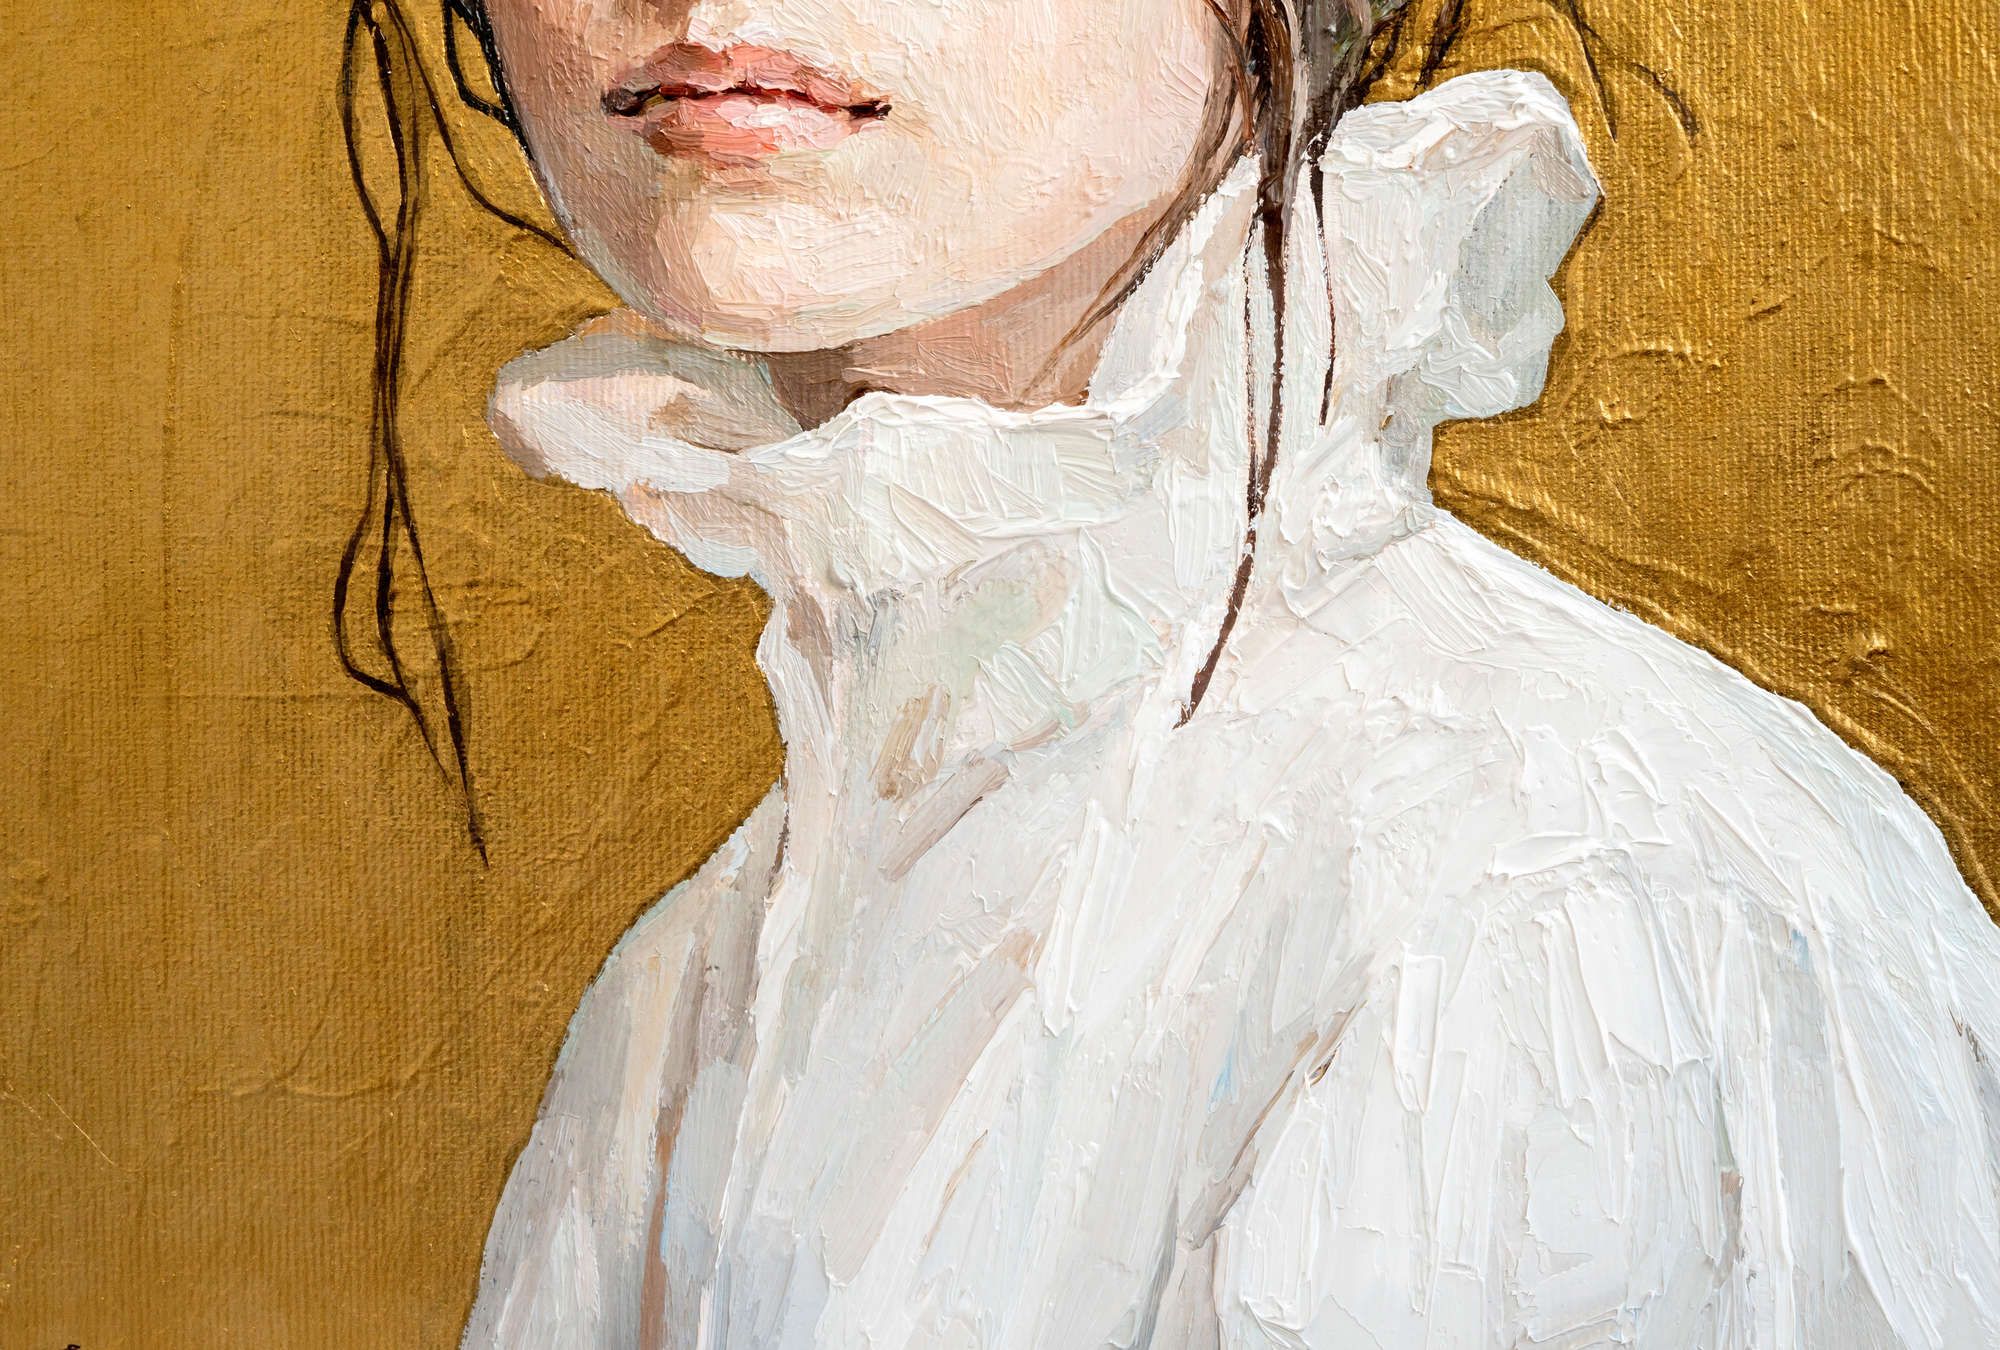             Photo wallpaper »golda« - partial portrait of a woman - artwork with linen structure | matt, smooth non-woven fabric
        